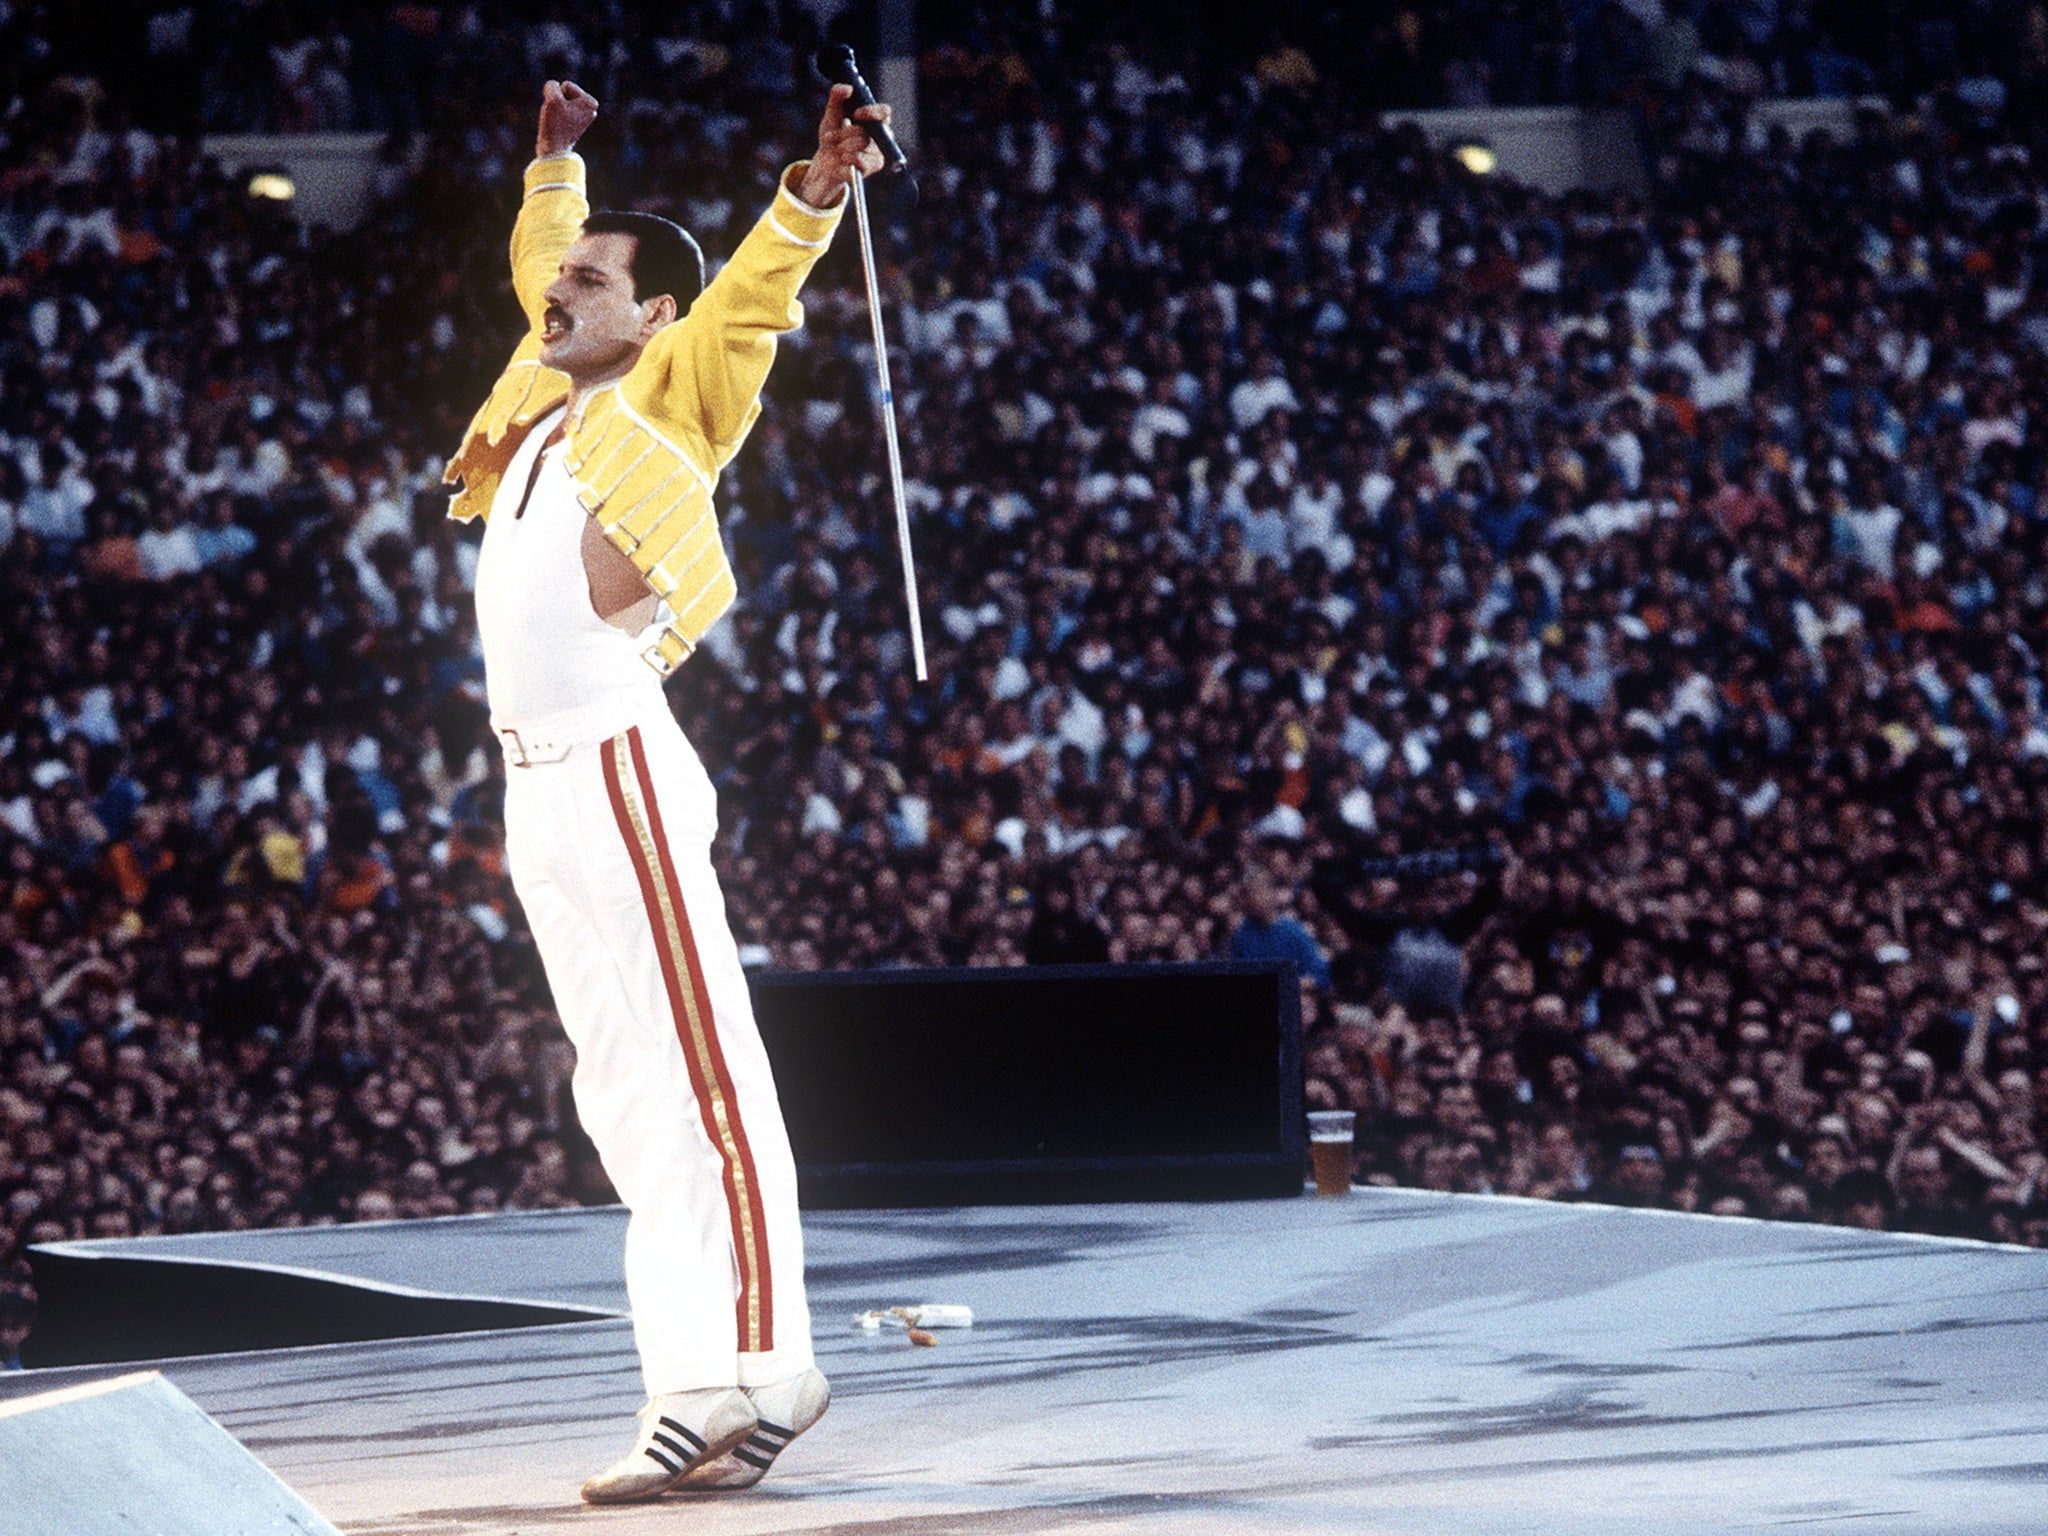 Bohemian Rhapsody: New image of Rami Malek as Freddie Mercury